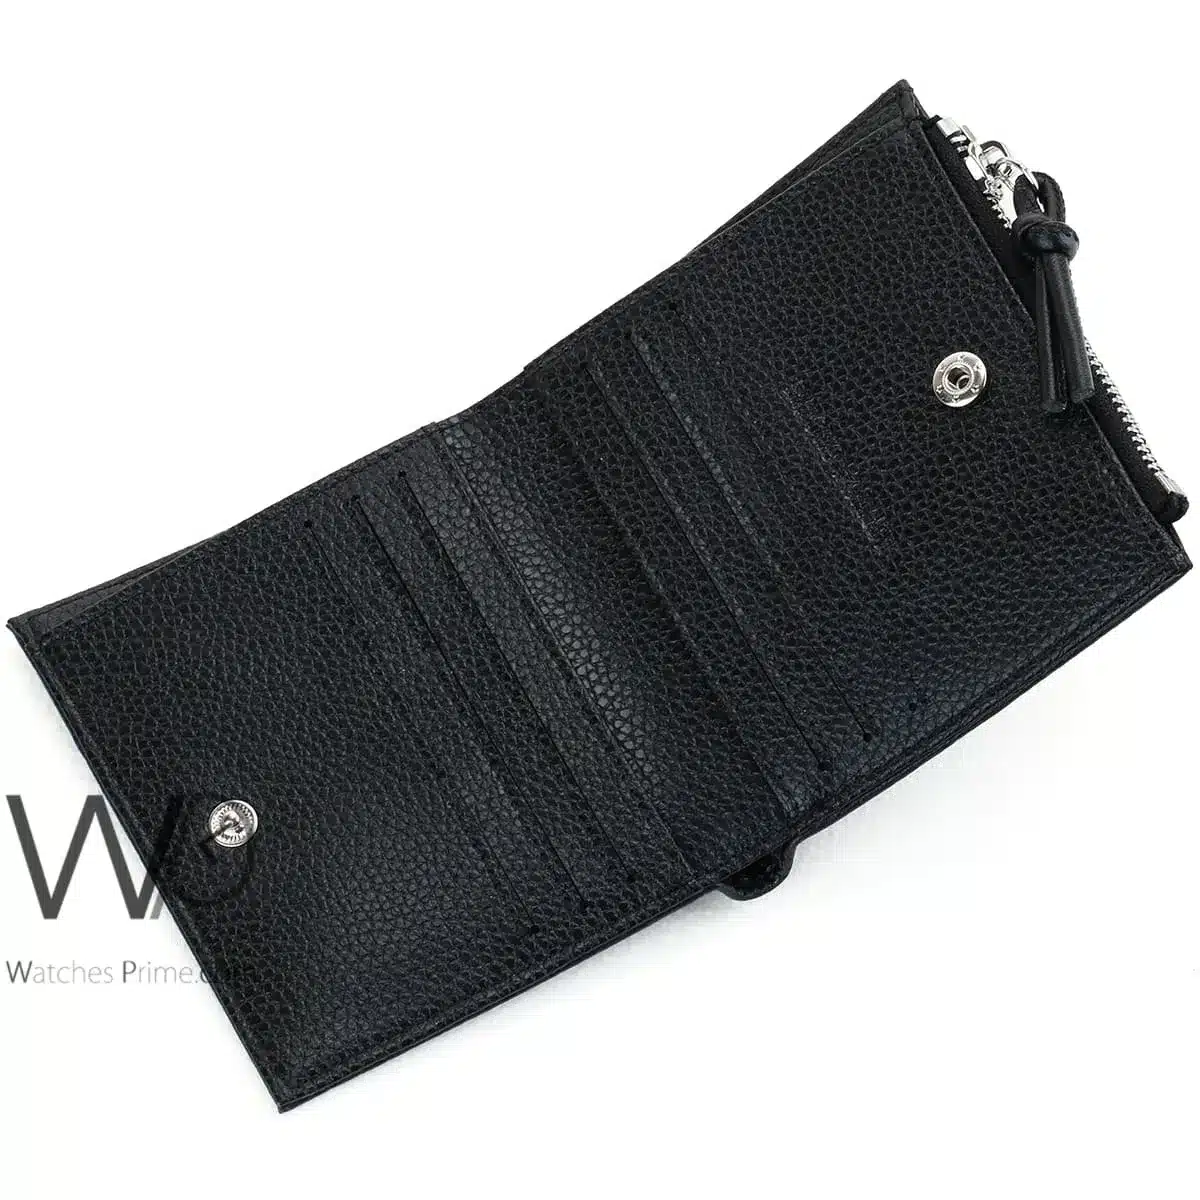 Emporio Armani Zipper Wallet Black For Men | Watches Prime